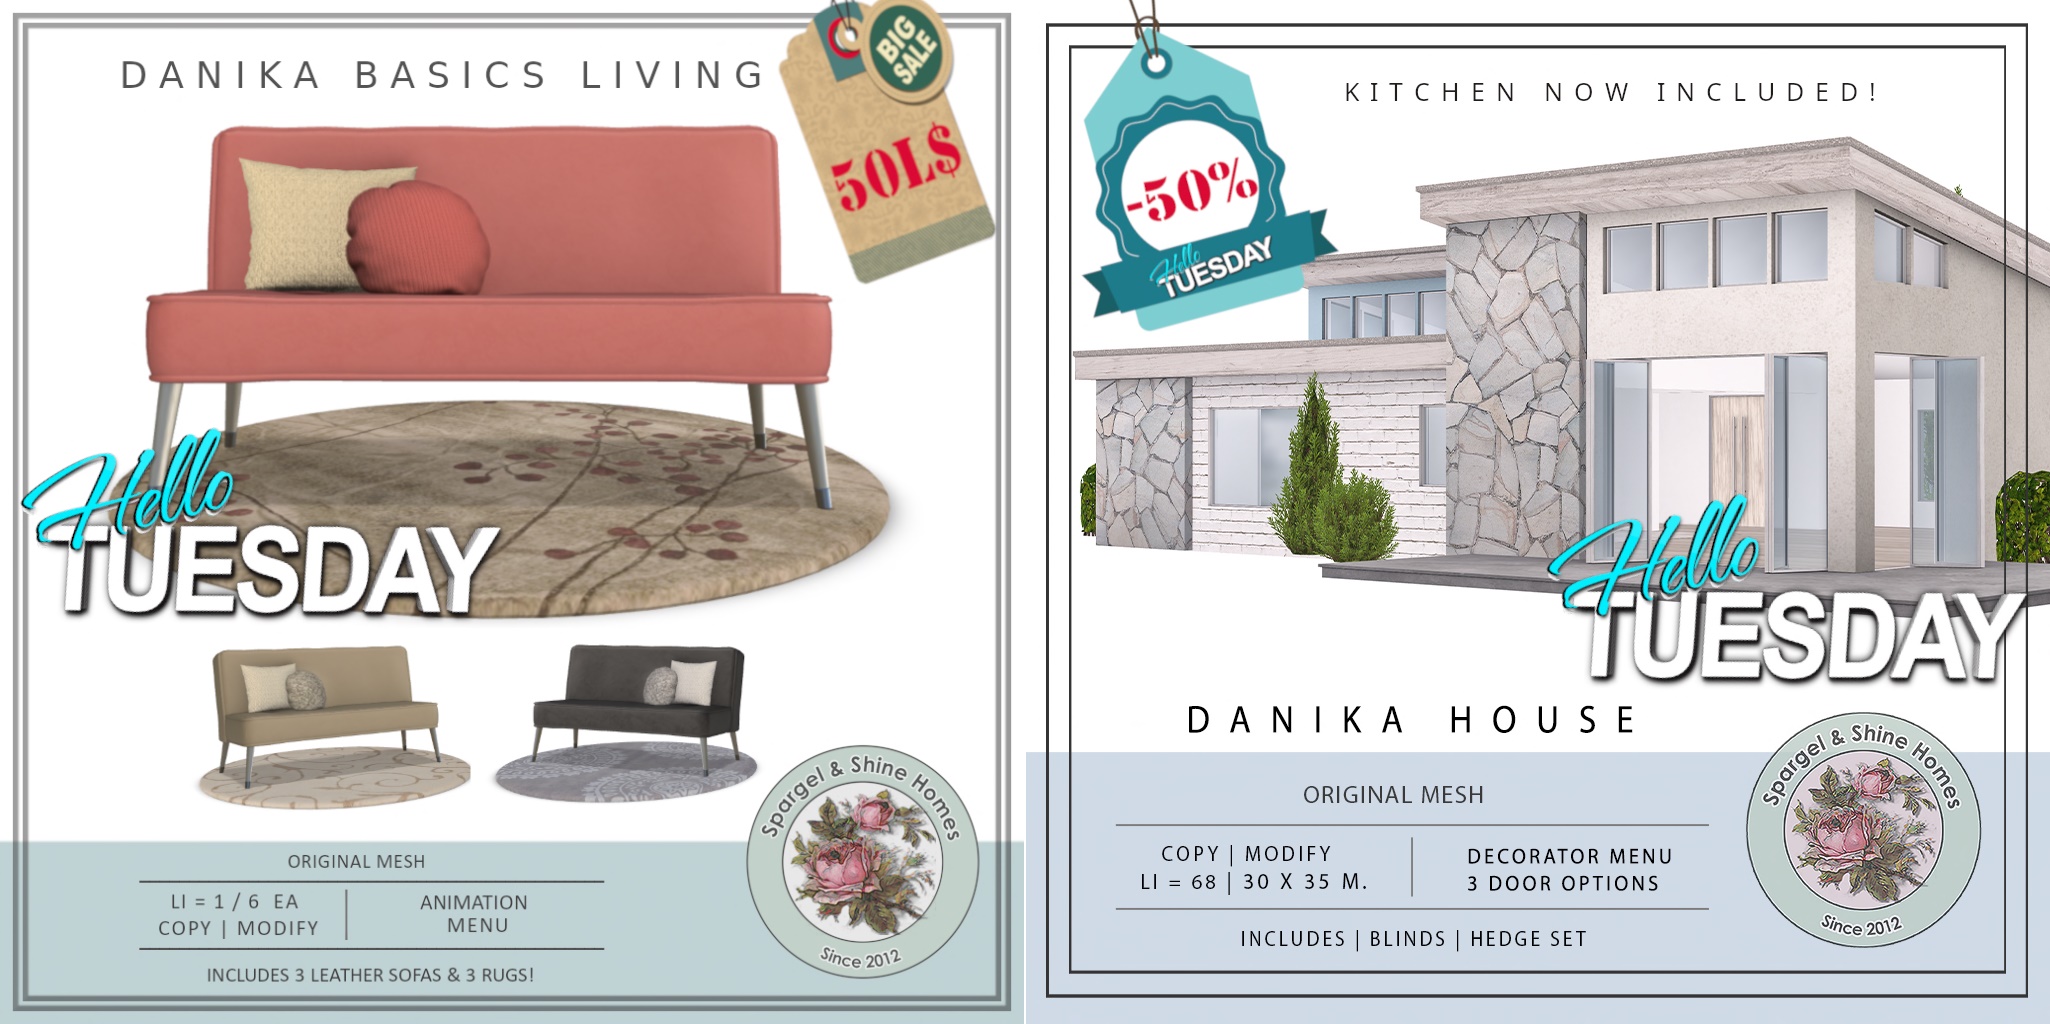 Spargel & Shine – Danika Basics Living & Danika House